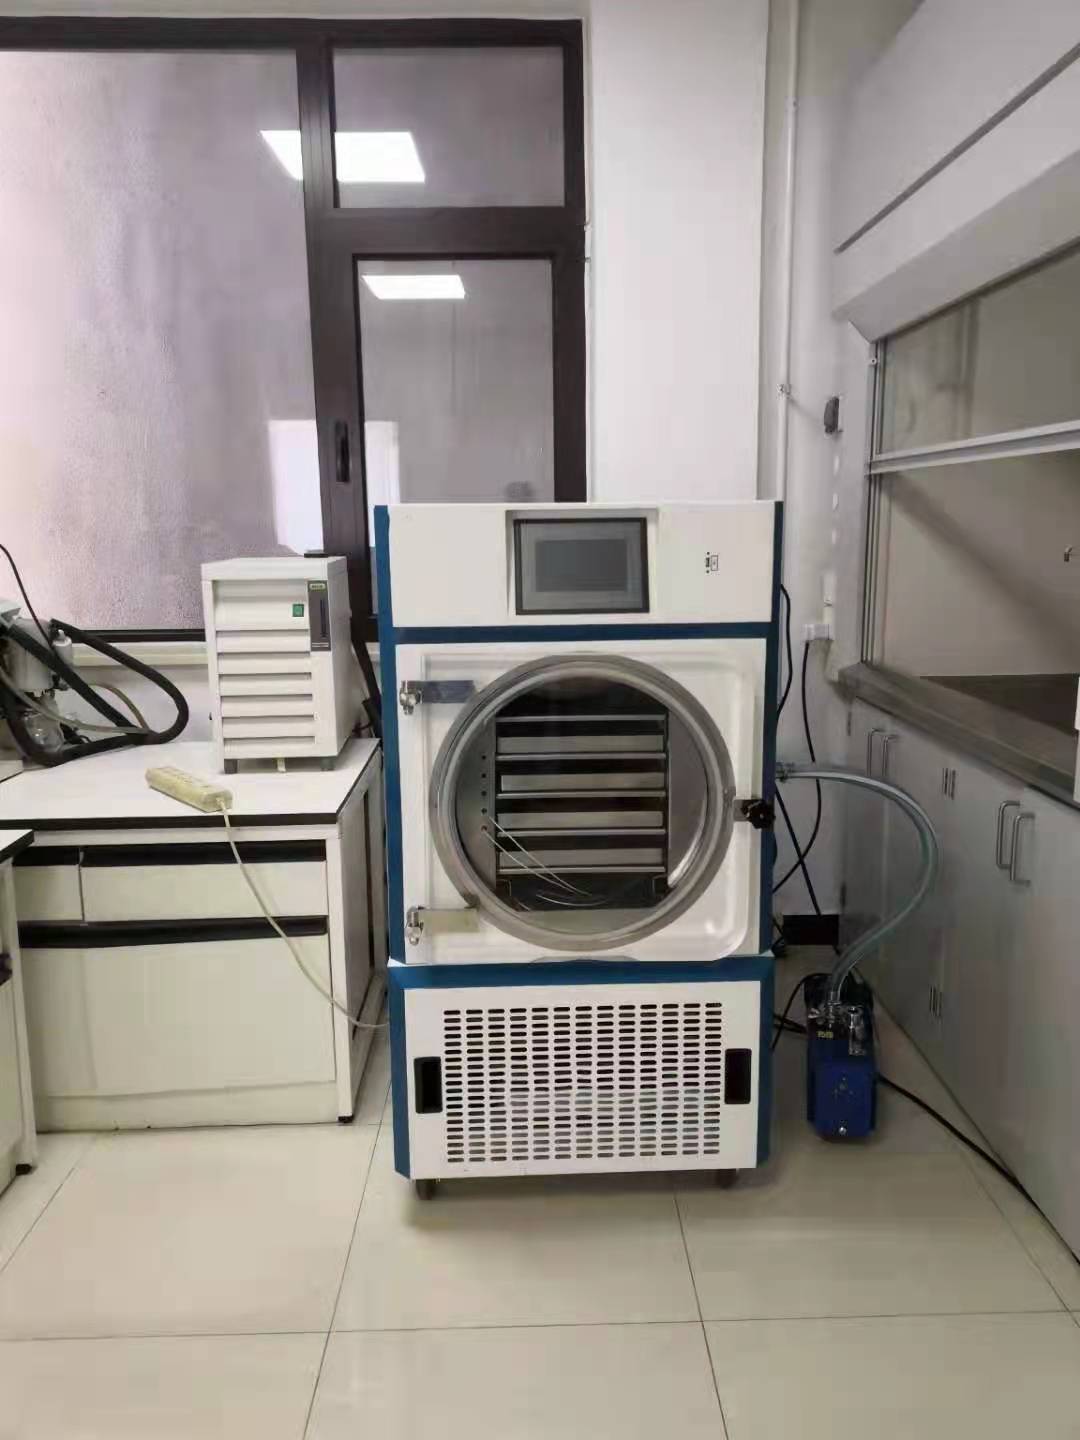 NG-06 6kg Vertical Household Freeze Dryer